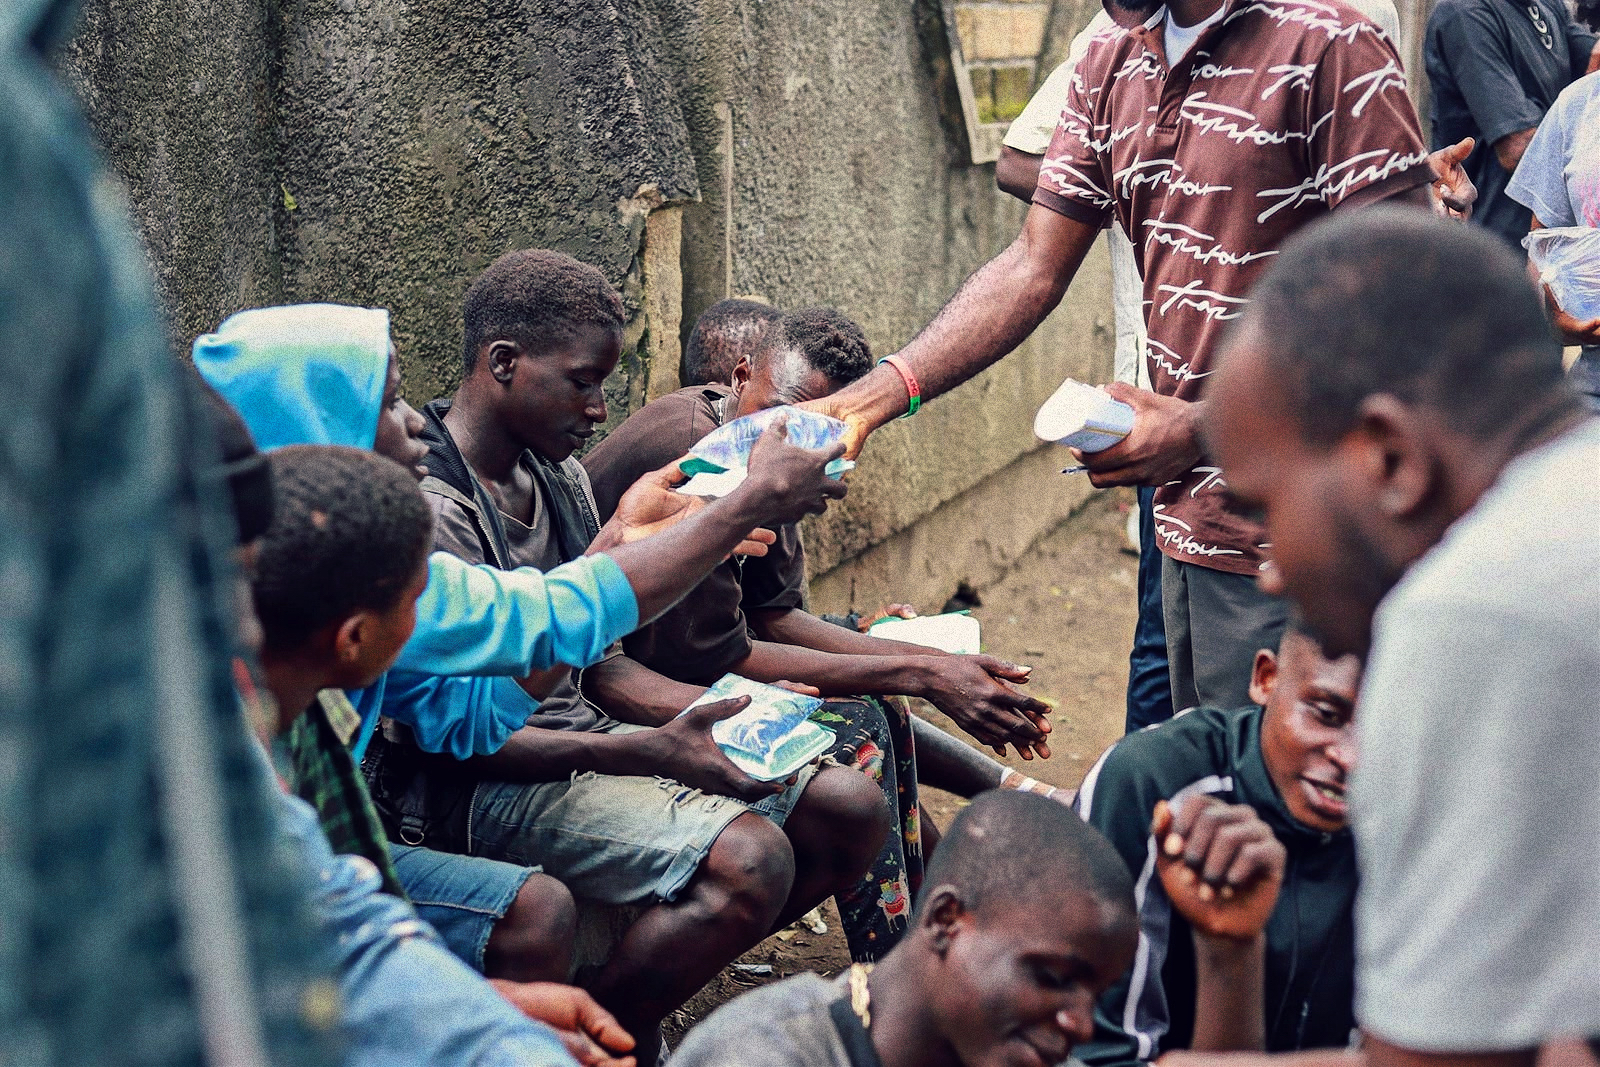 Street kids in Calabar, Nigeria